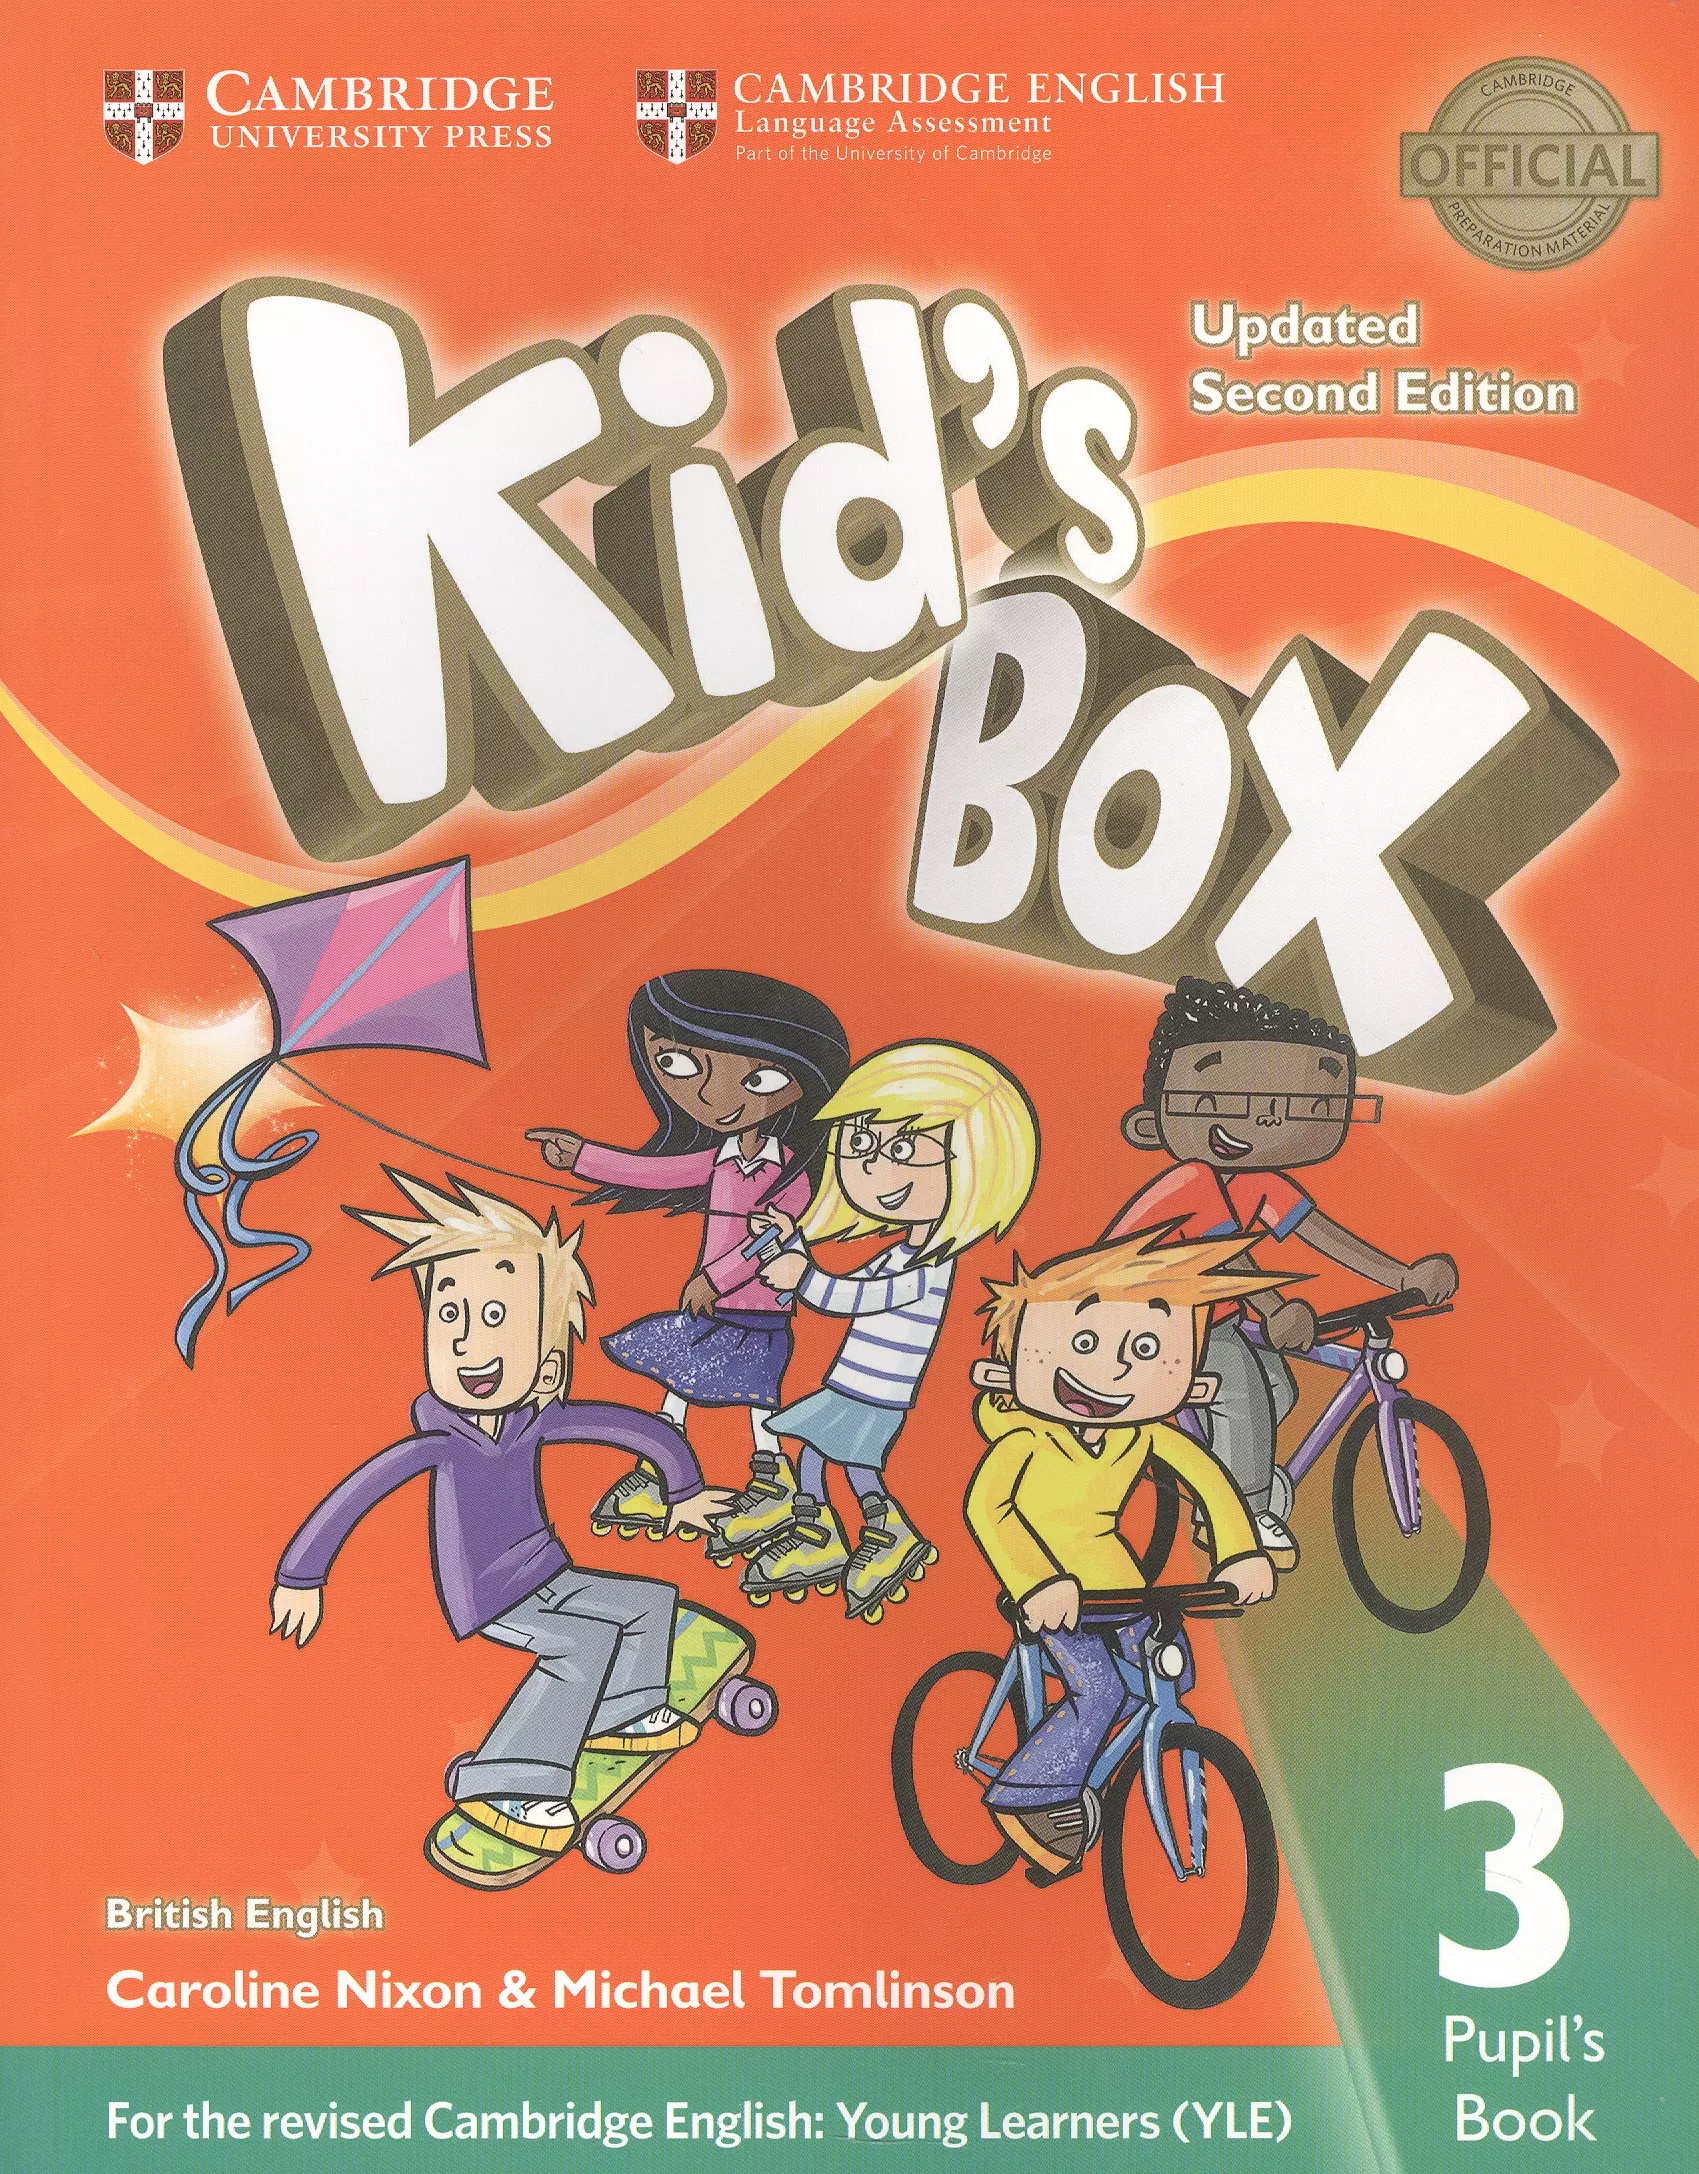 Tomlinson Michael, Nixon Caroline - Kids Box. British English. Pupils Book 3. Updated Second Edition